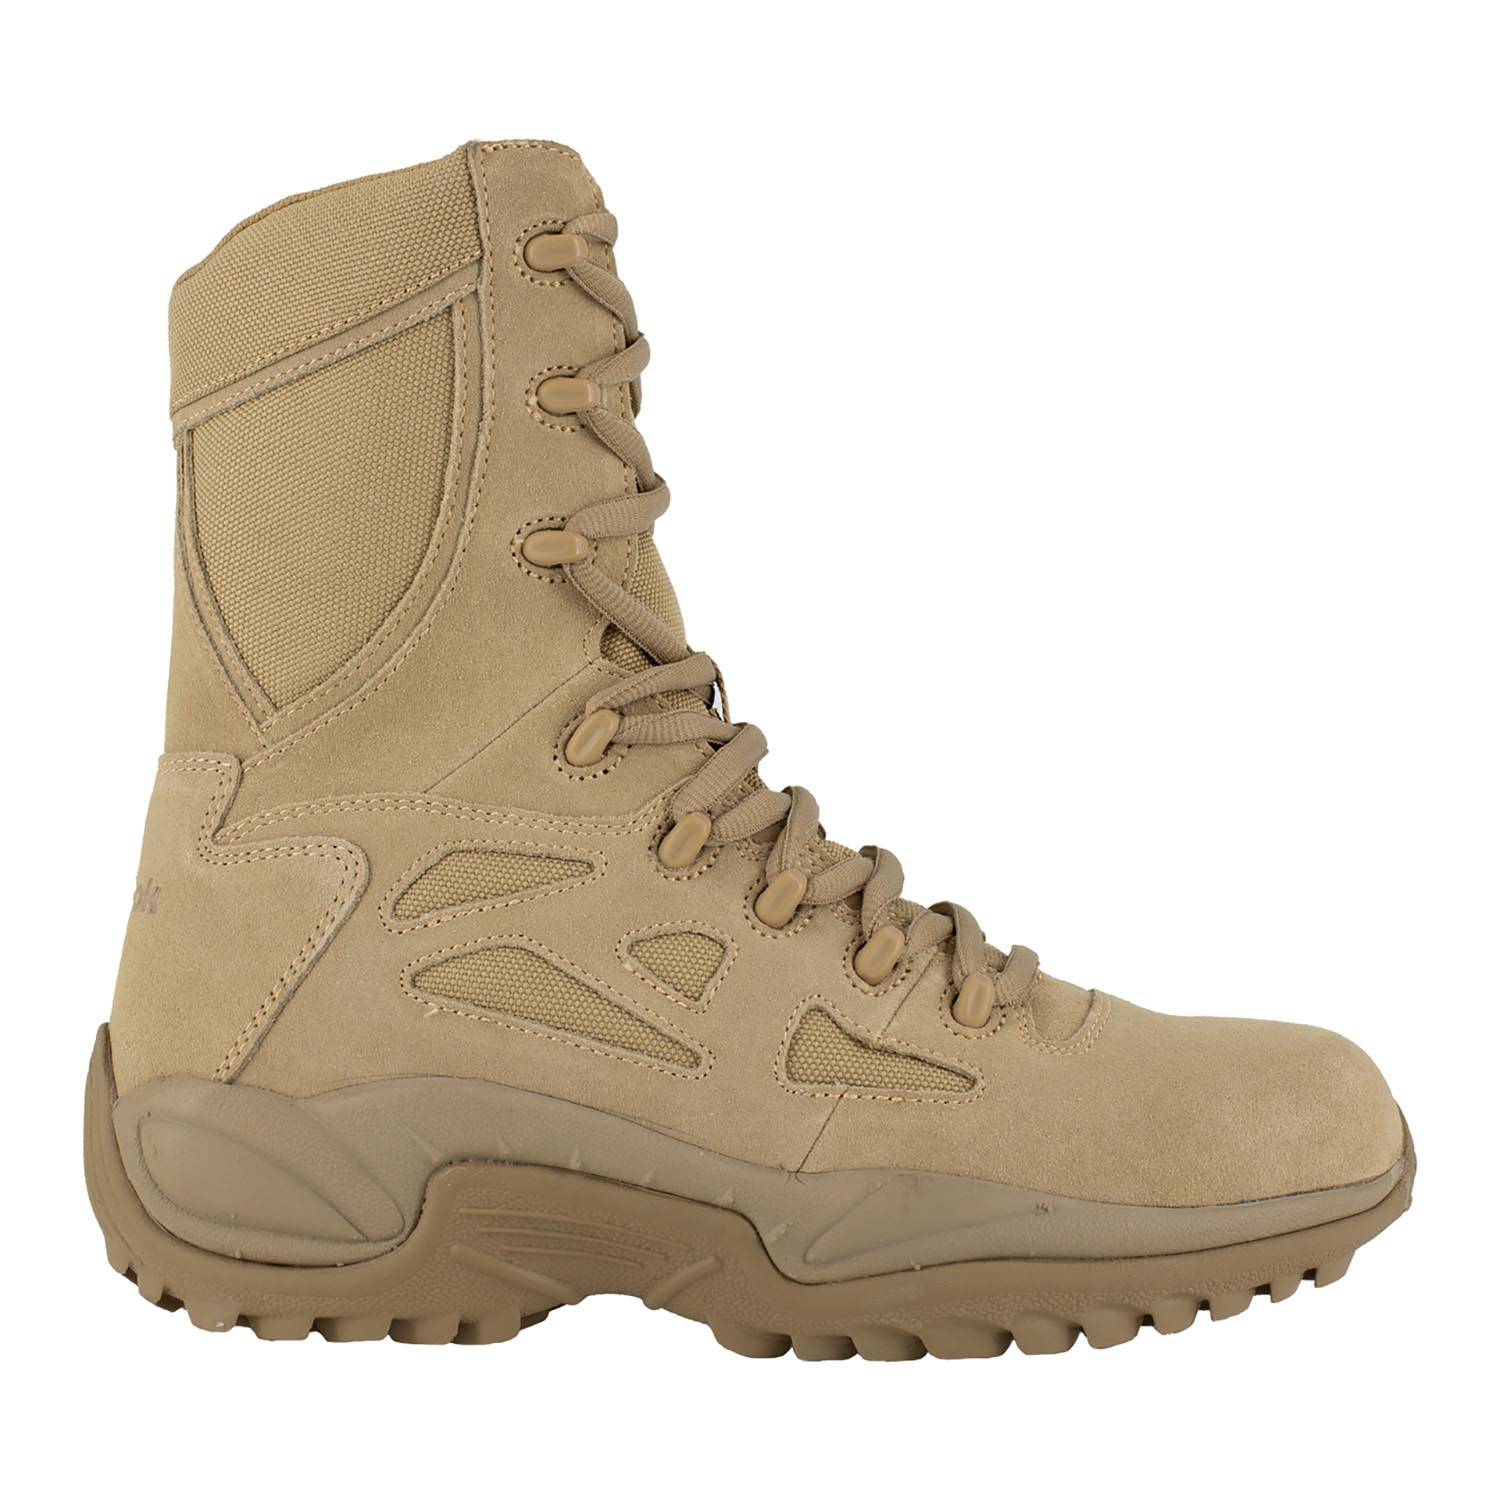 Reebok Men's 8" Stealth Side-Zip Desert Military Boots